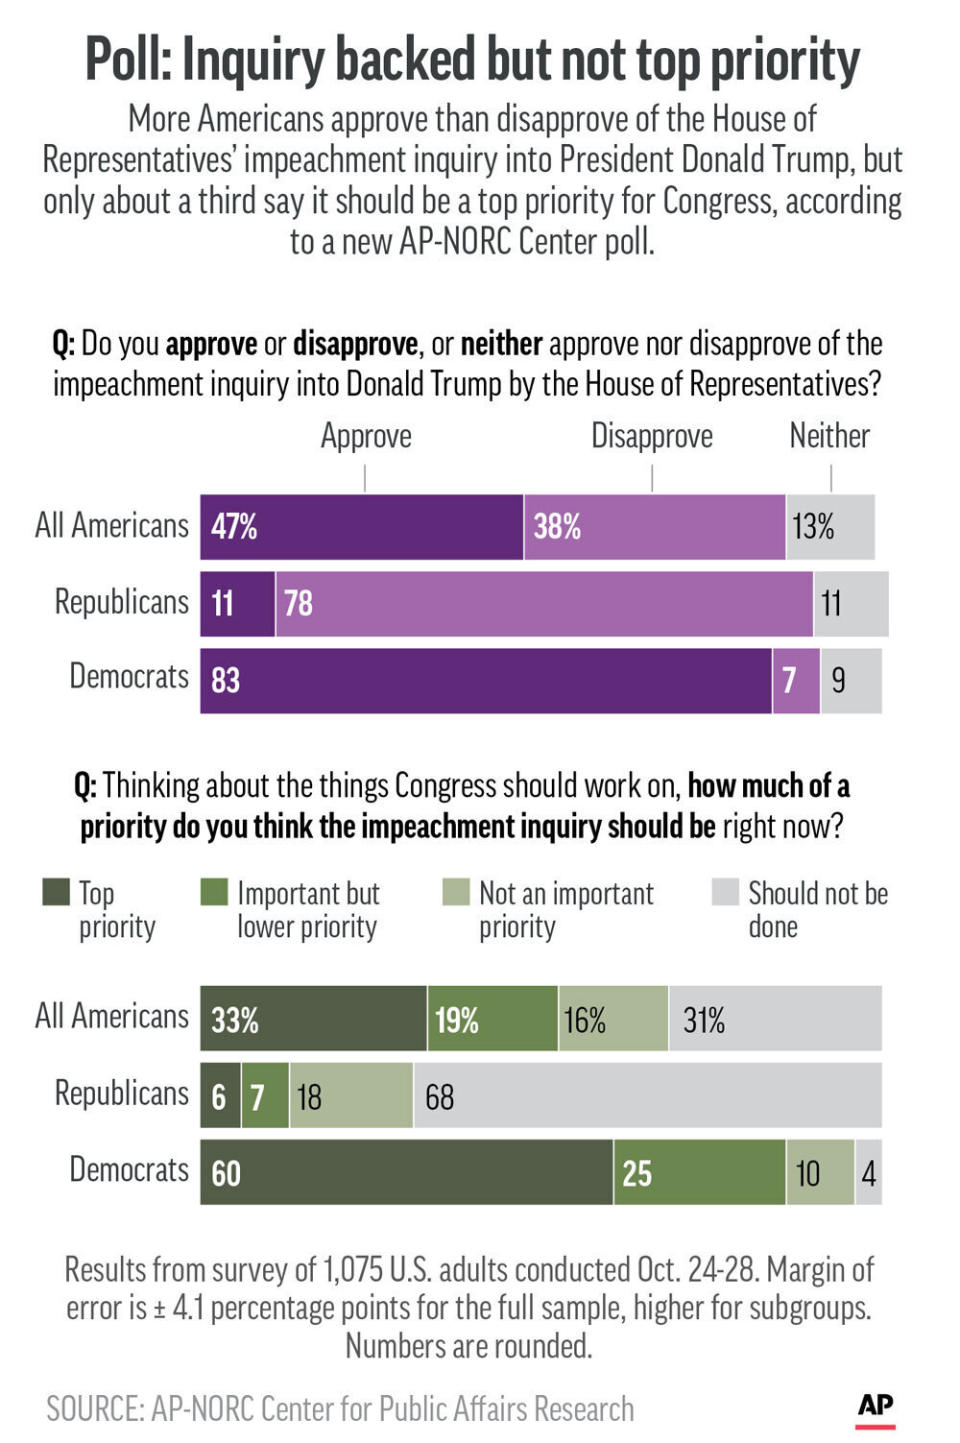 Results of AP-NORC Center poll on attitudes toward impeachment.;